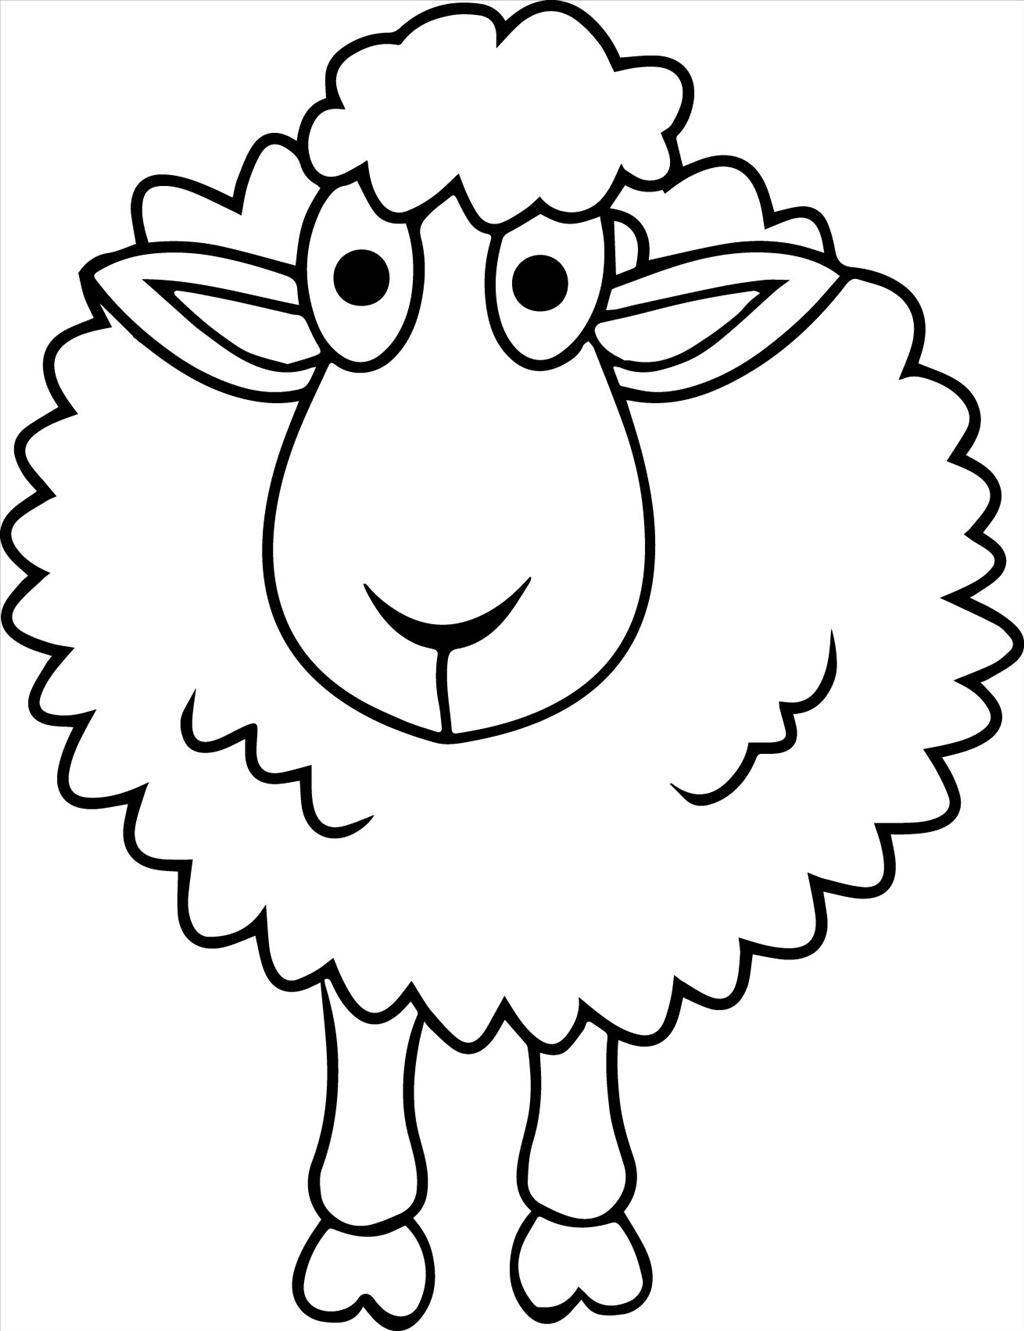 Cartoon Sheep Coloring Pages at GetDrawings Free download